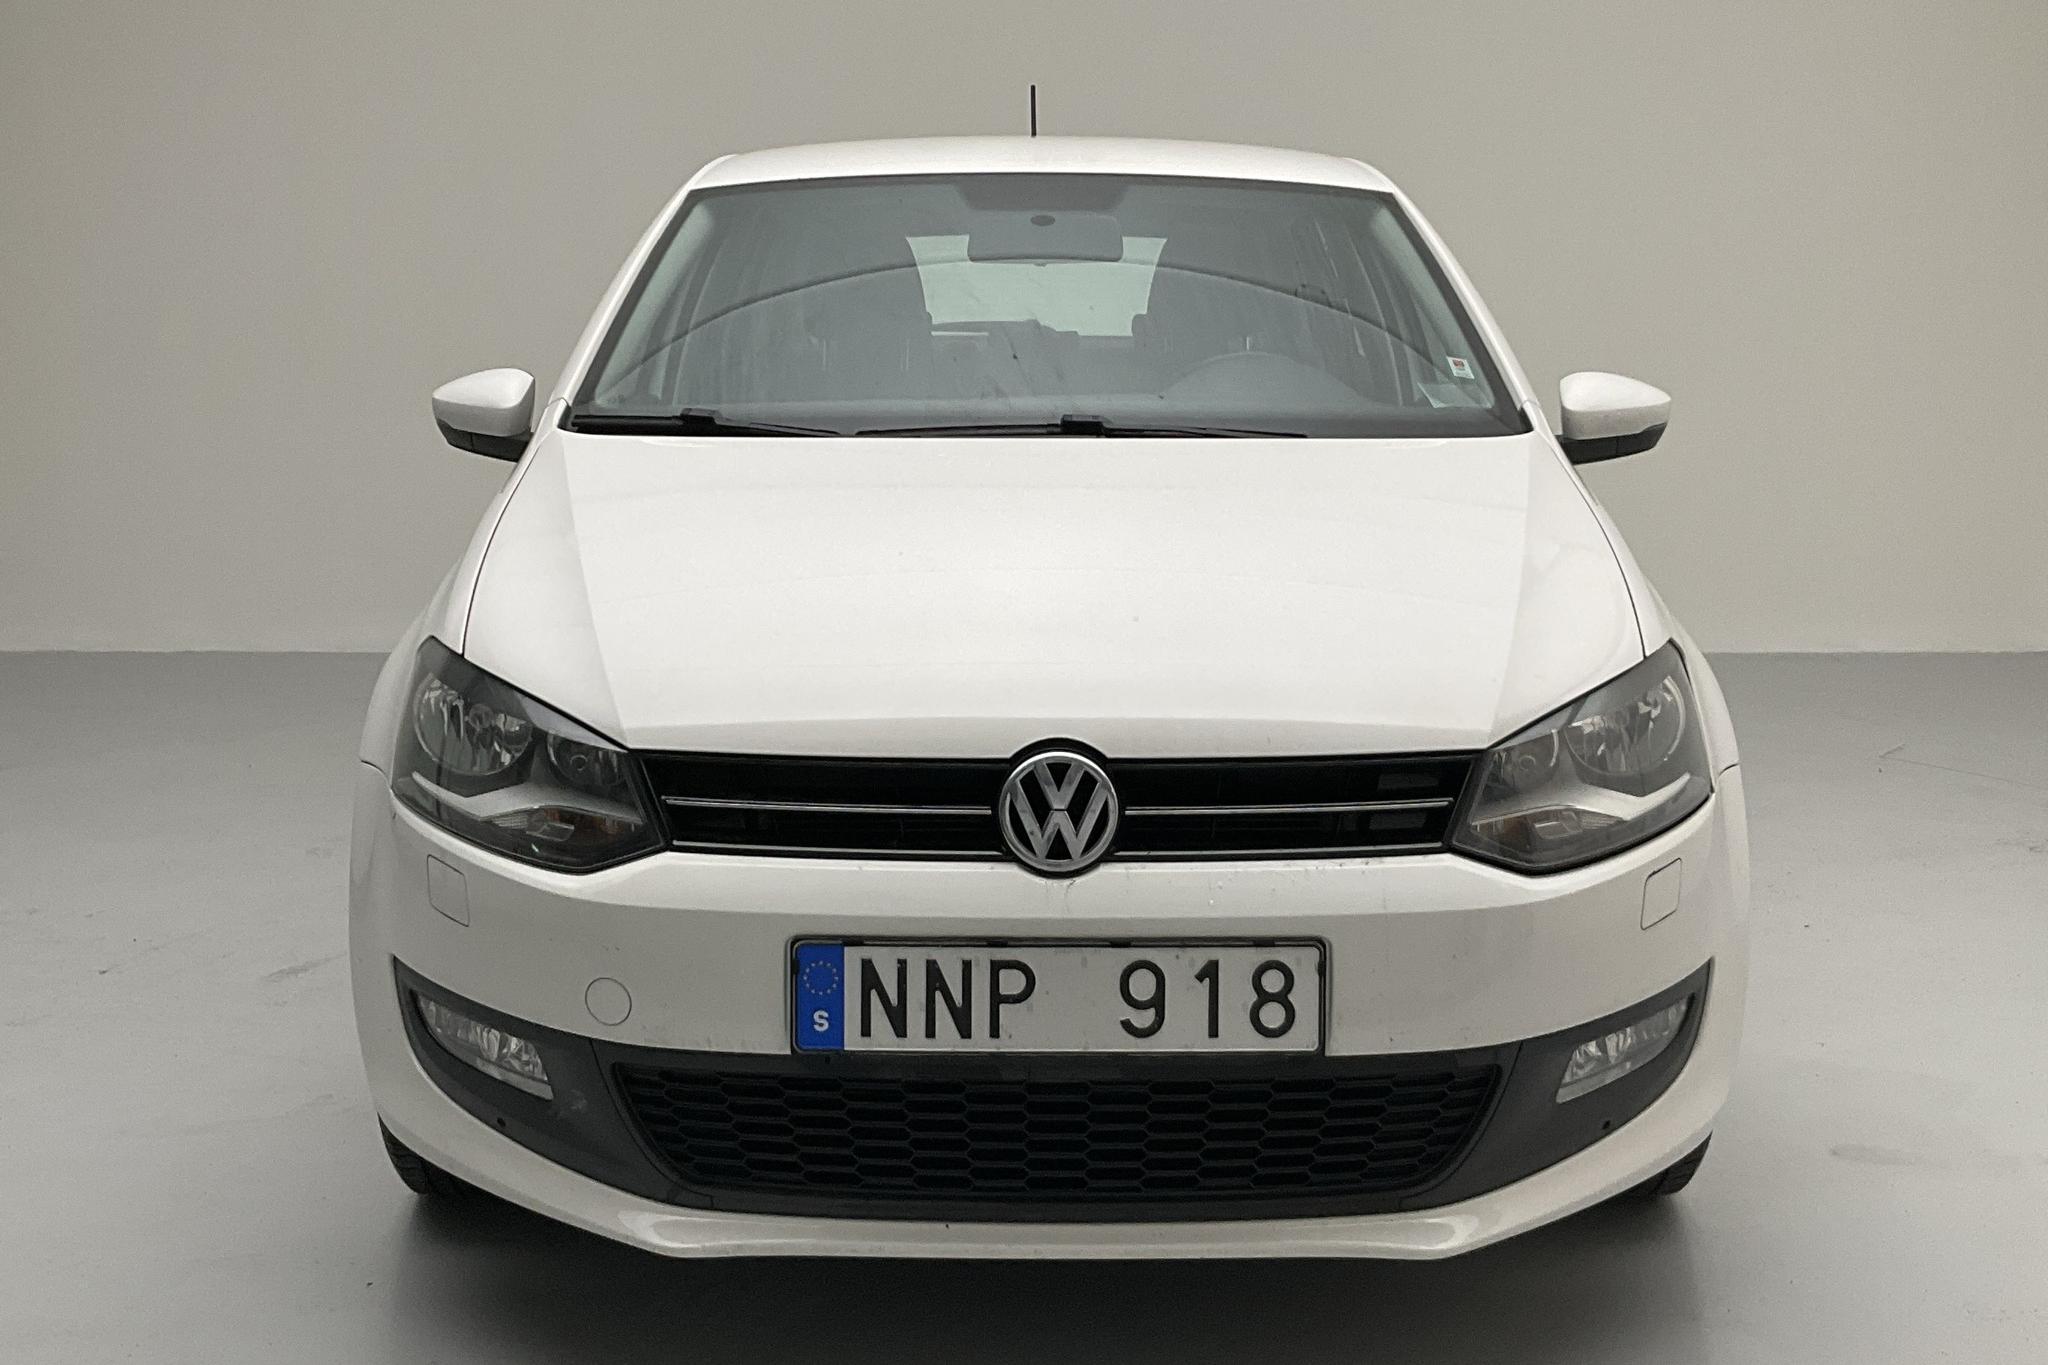 VW Polo 1.2 TSI 5dr (90hk) - 10 846 mil - Manuell - vit - 2013